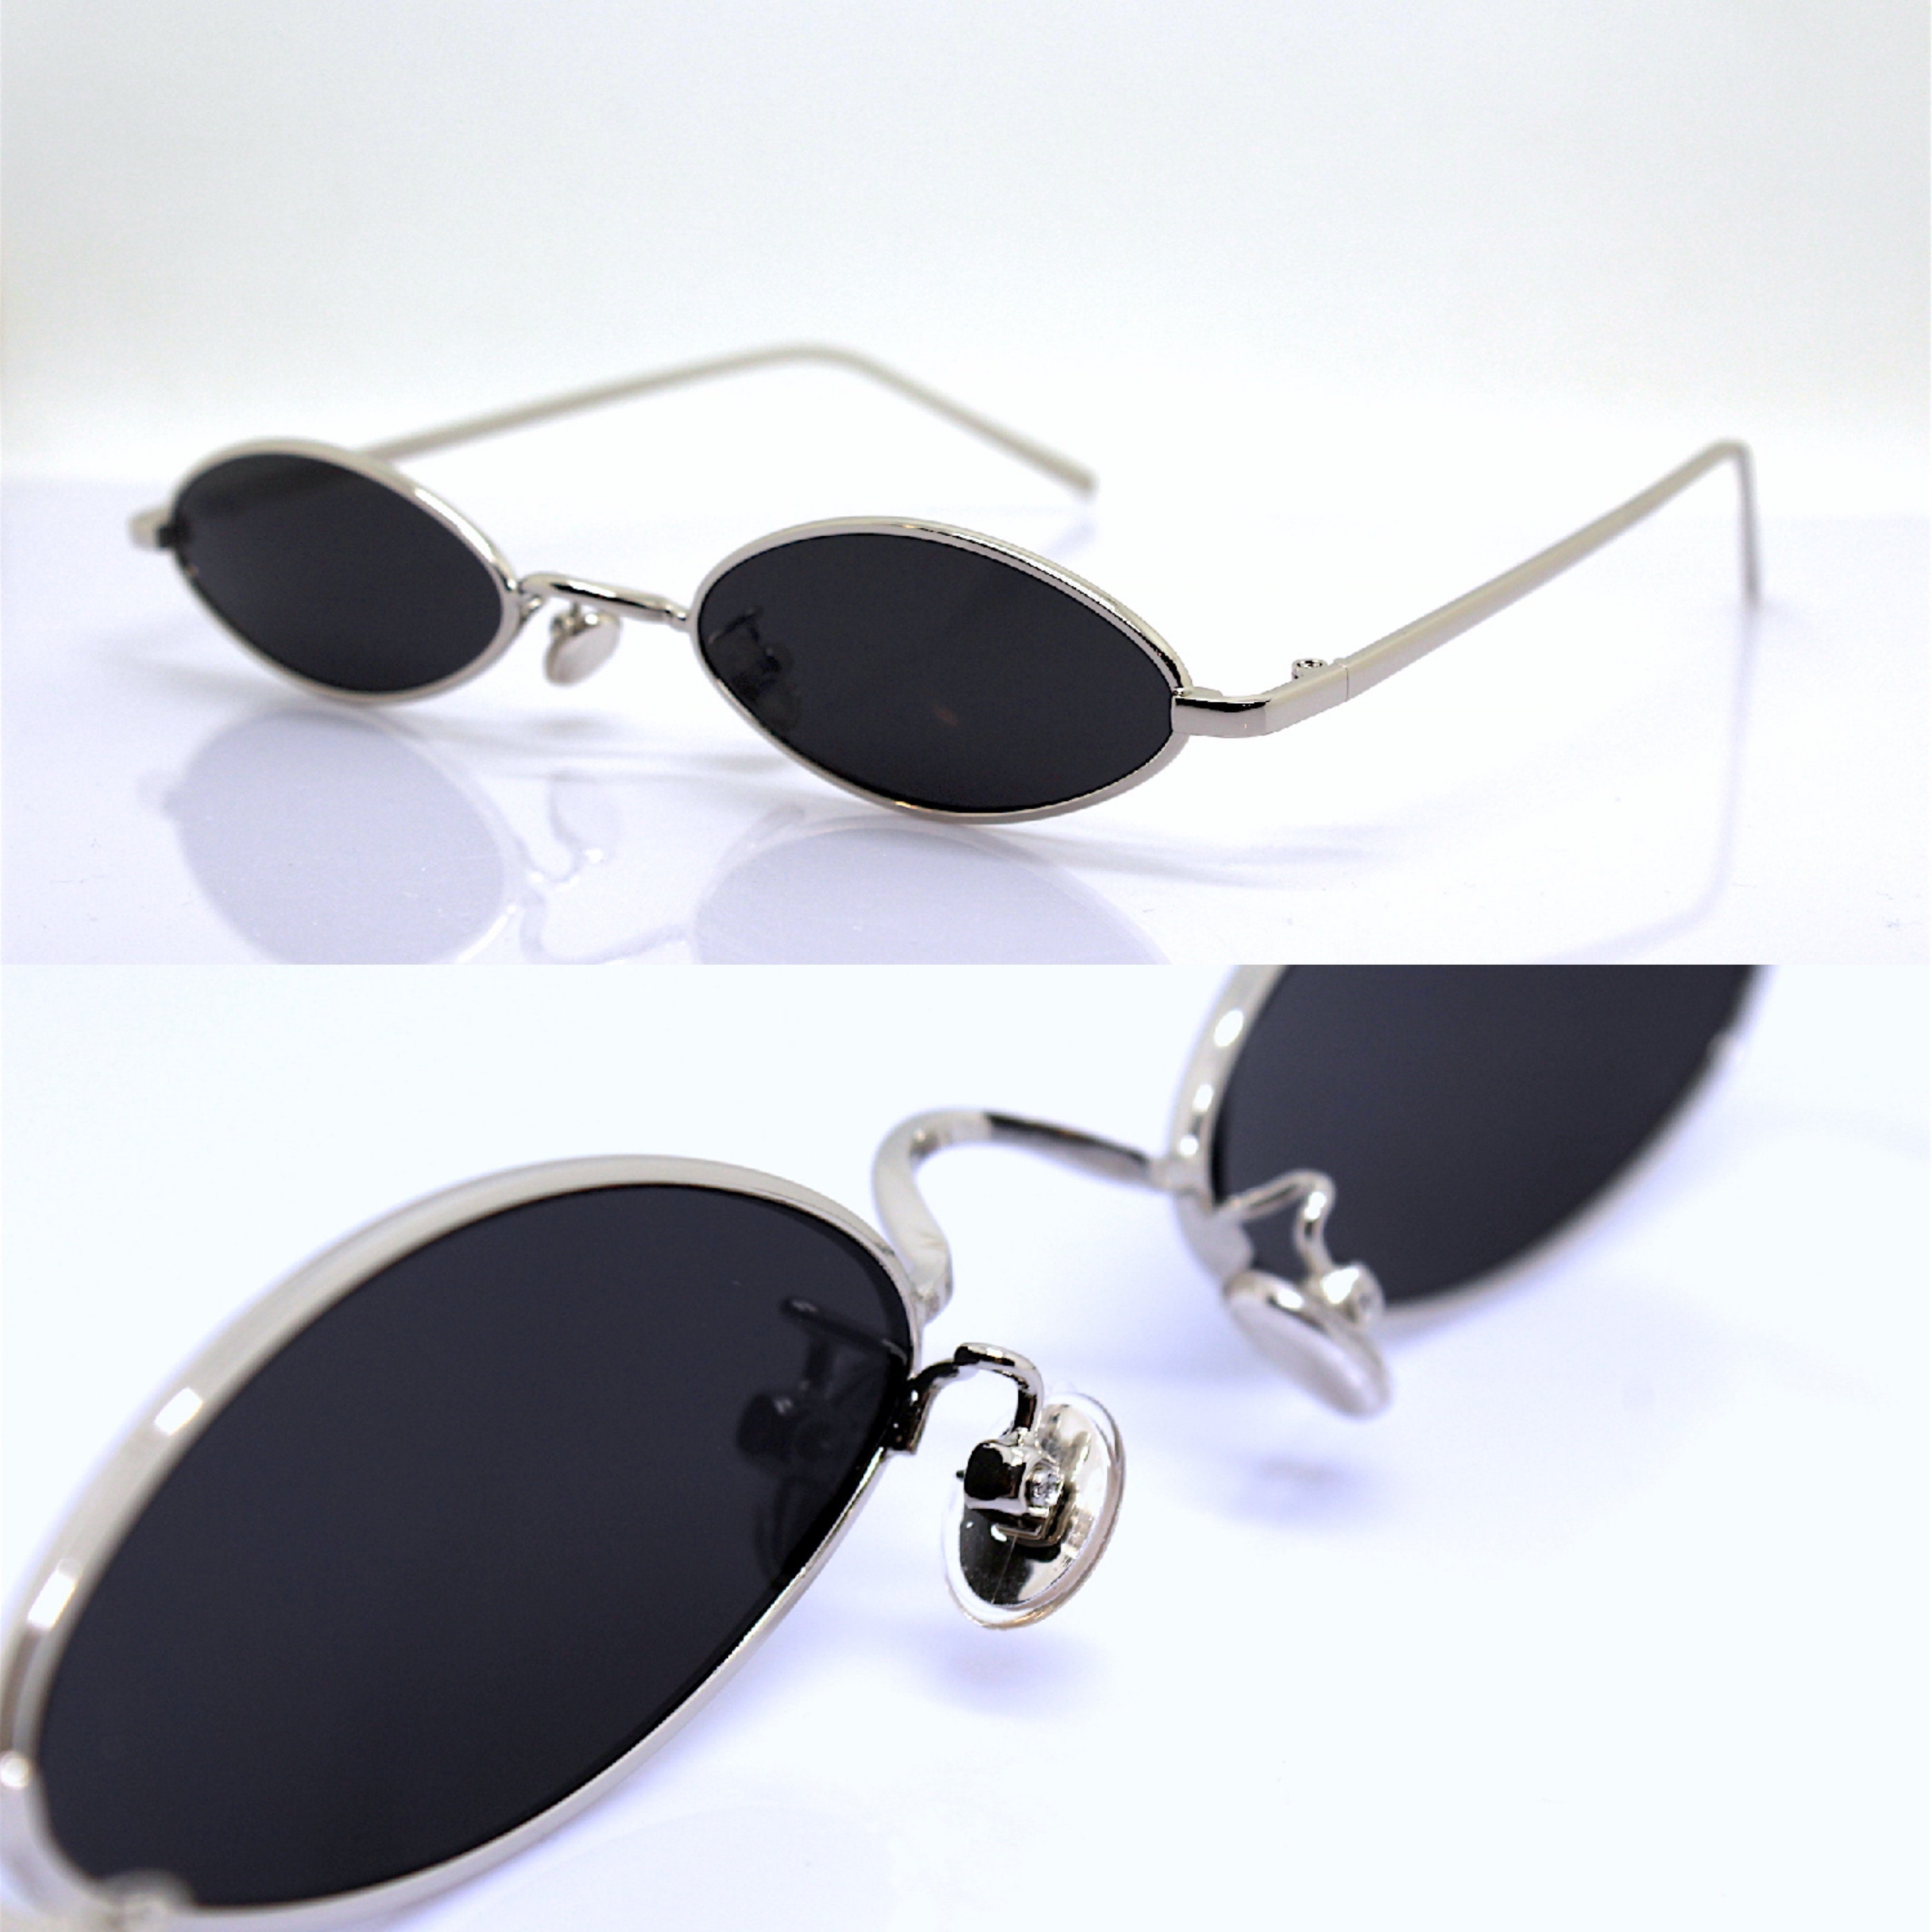 Calanovella Cool Funky Retro Small Oval Glasses for Men Women - Black